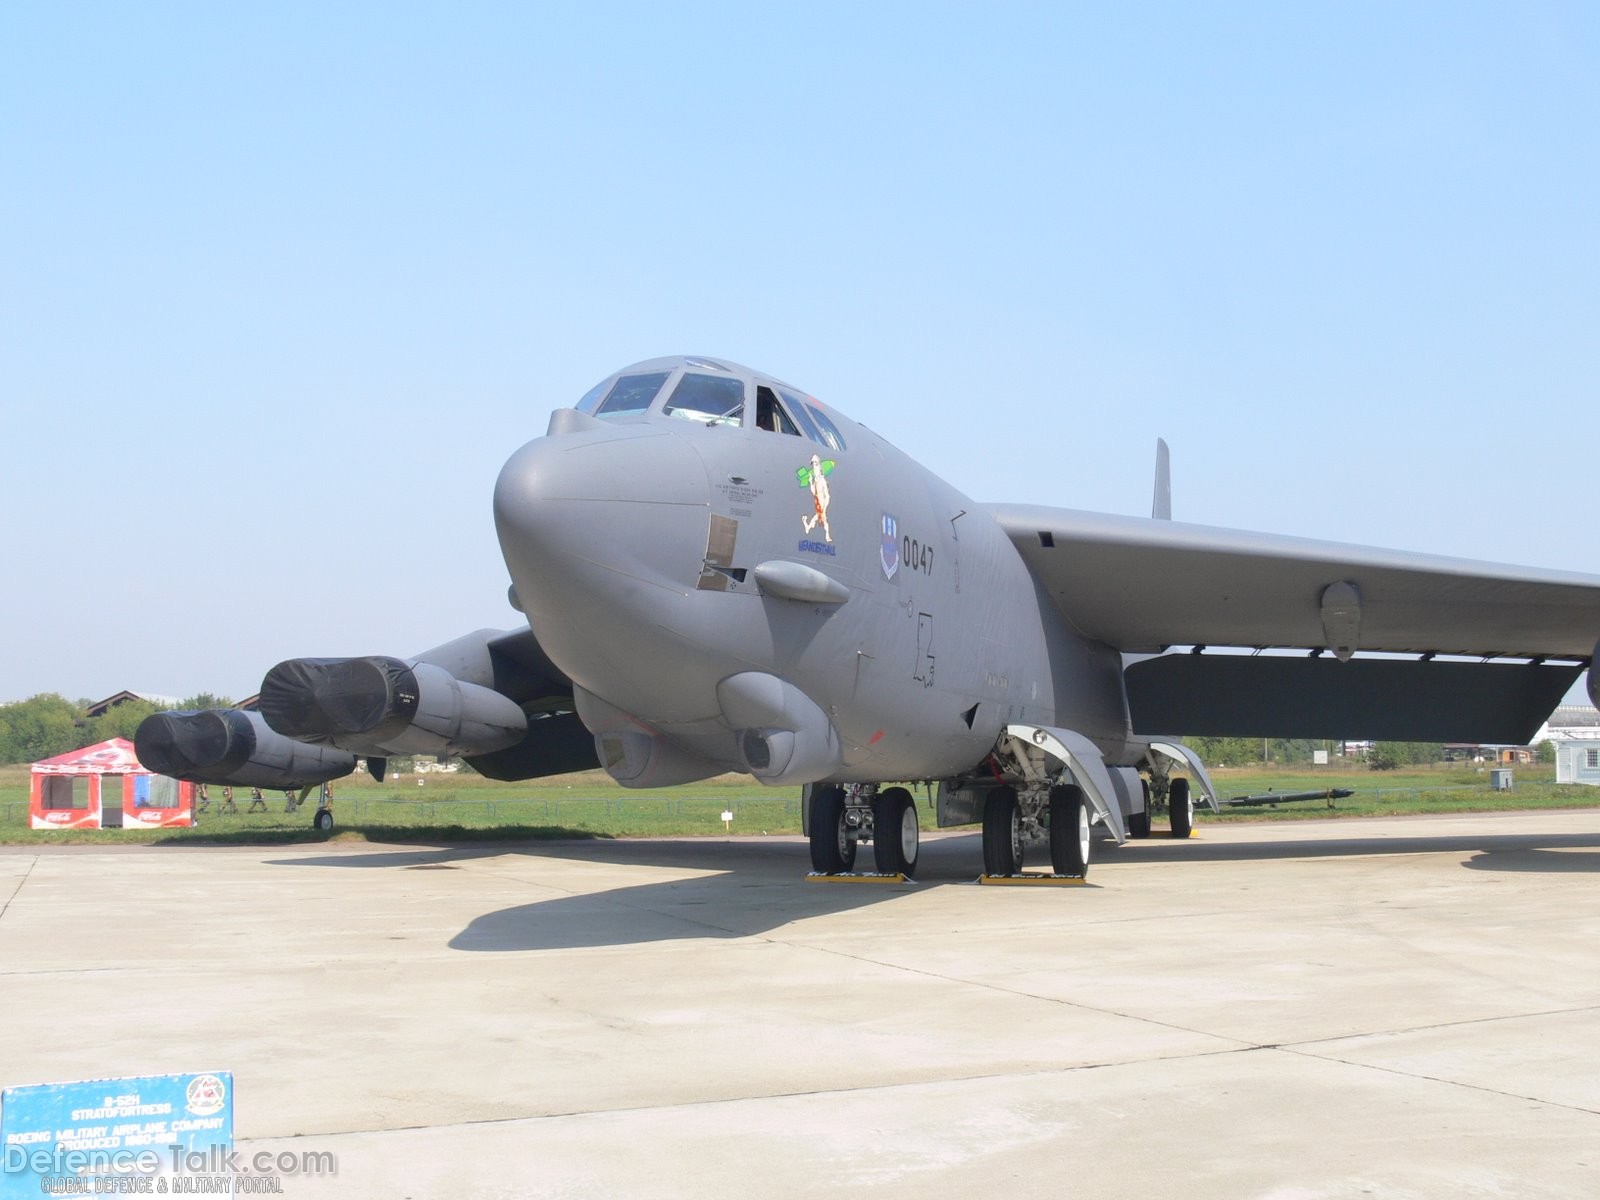 B-52 Bomber - MAKS 2007 Air Show